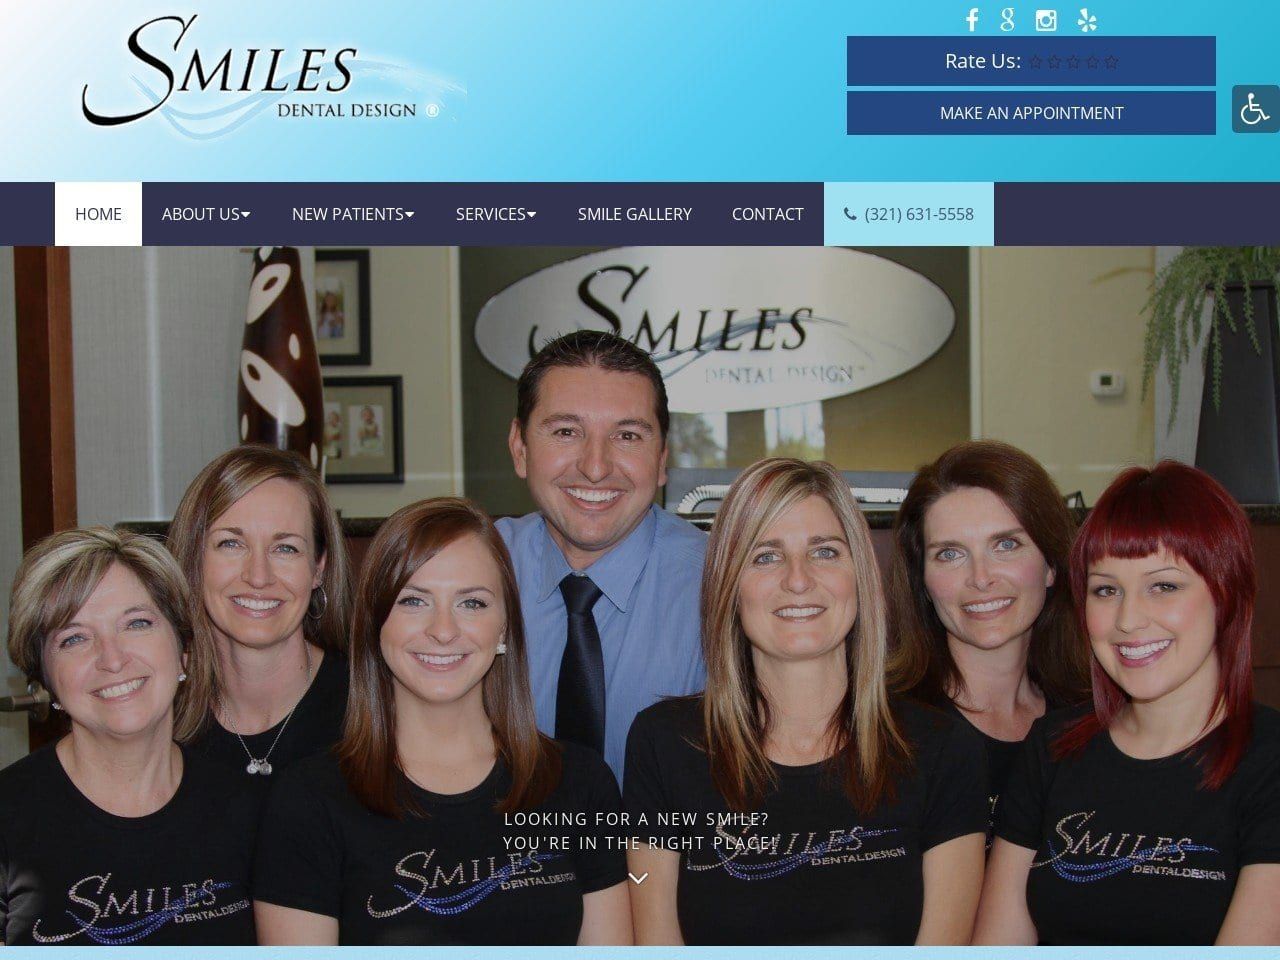 Smiles Dental Design Website Screenshot from smilesdentaldesign.com